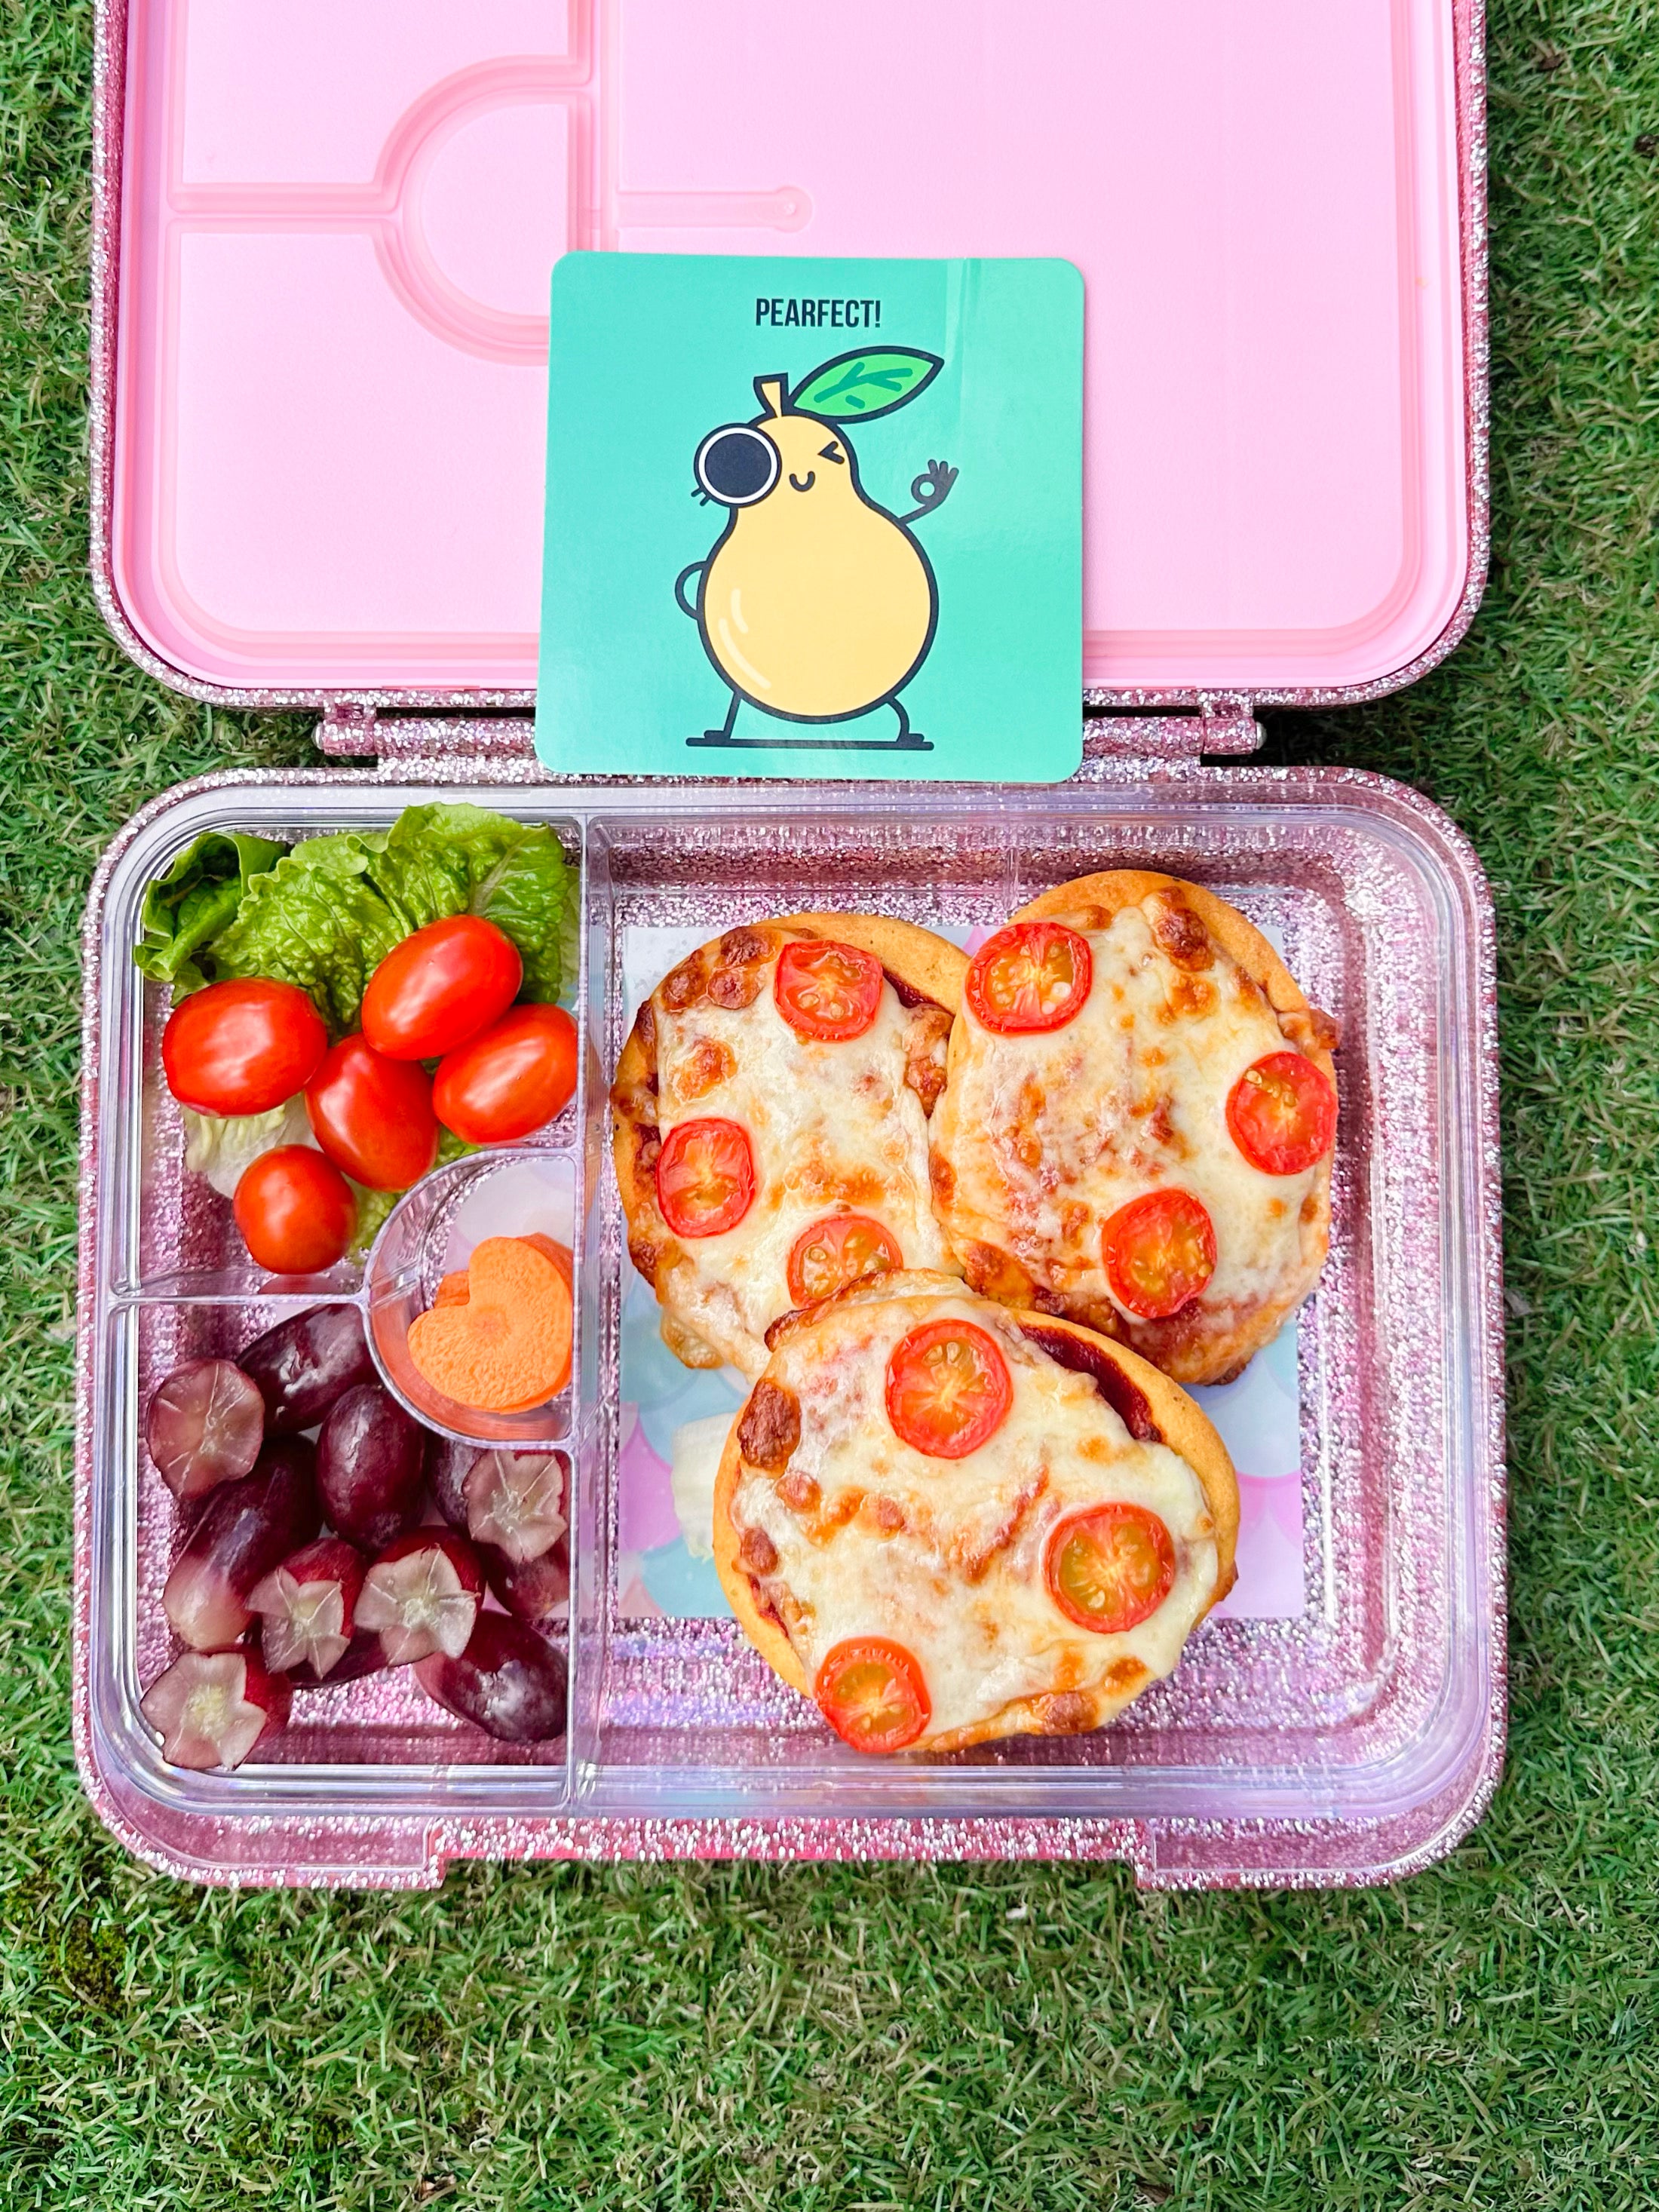 MISS BIG Bento Box,Lunch Box Kids,Ideal Leakproof Ecuador